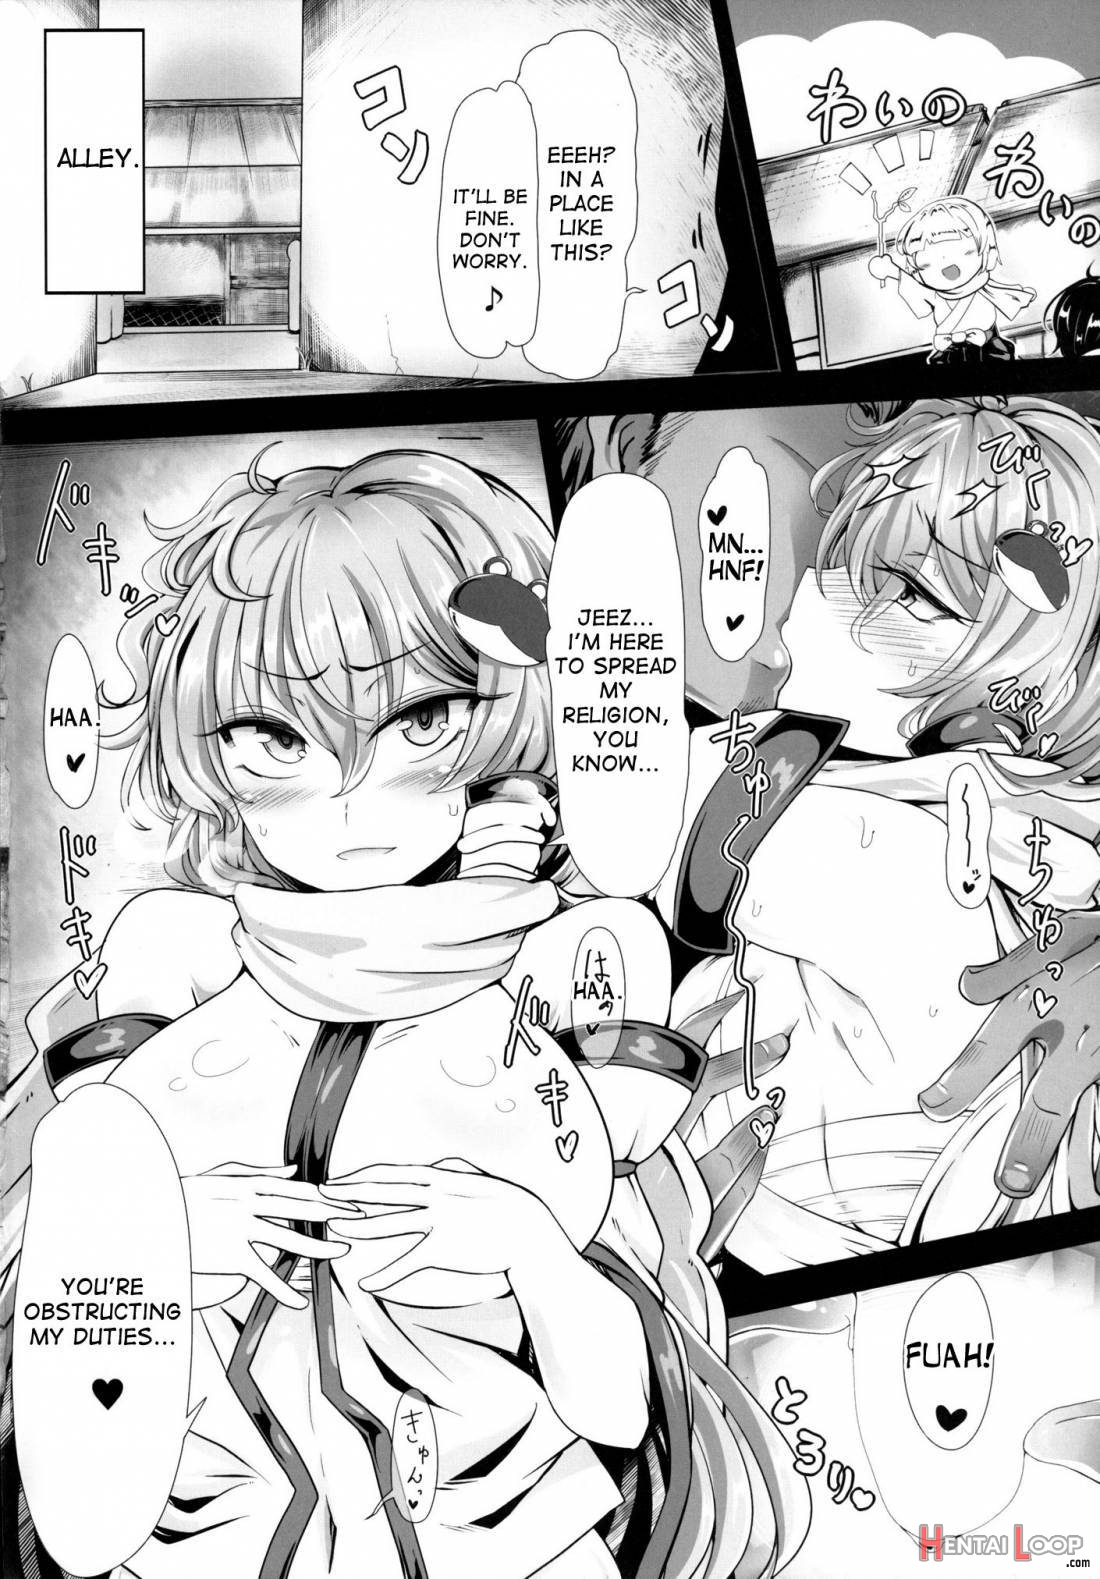 Sanae Na Konamaiki! page 3